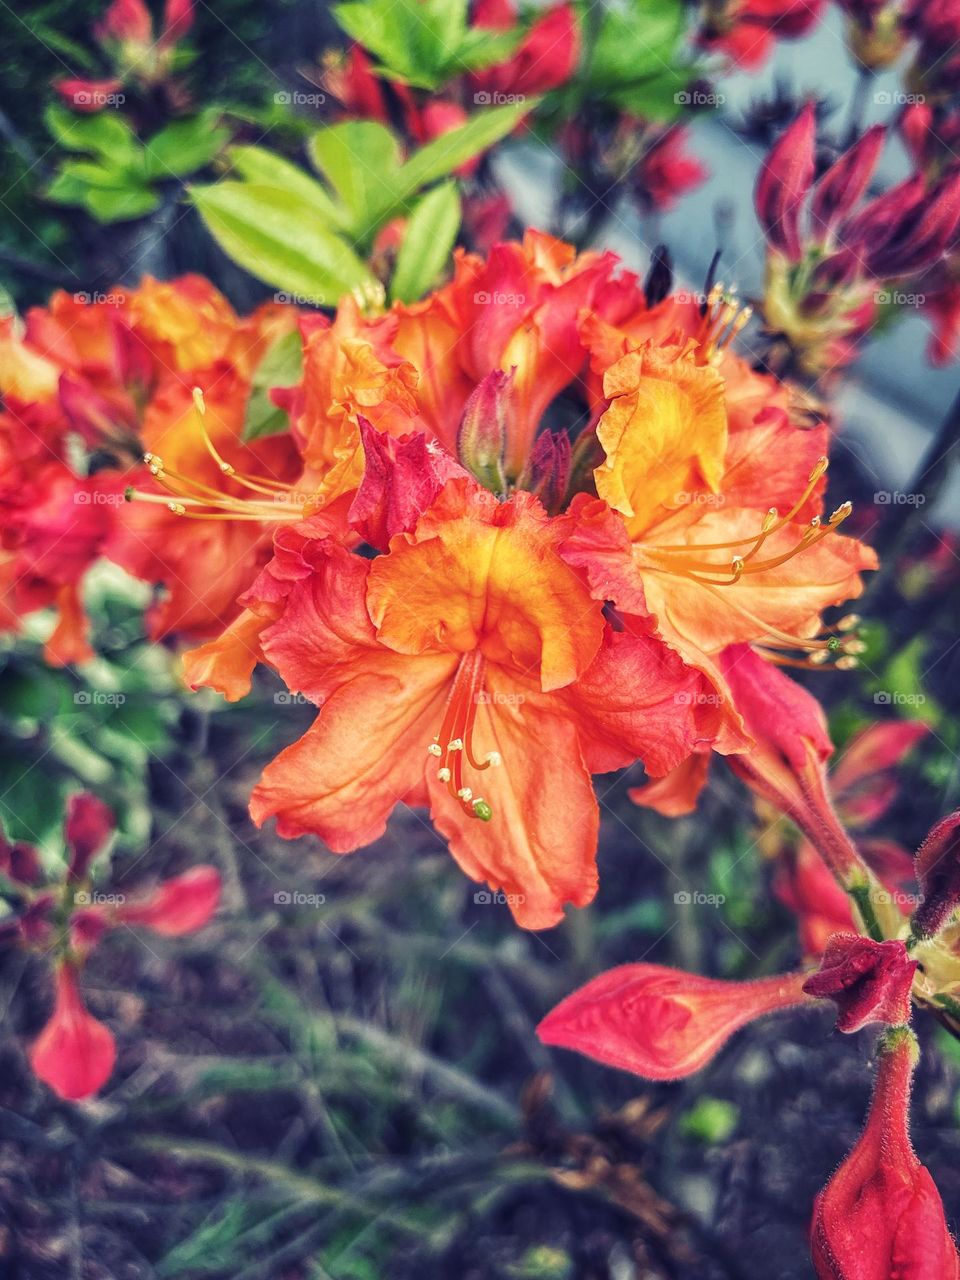 Orange and red azalea in my garden 